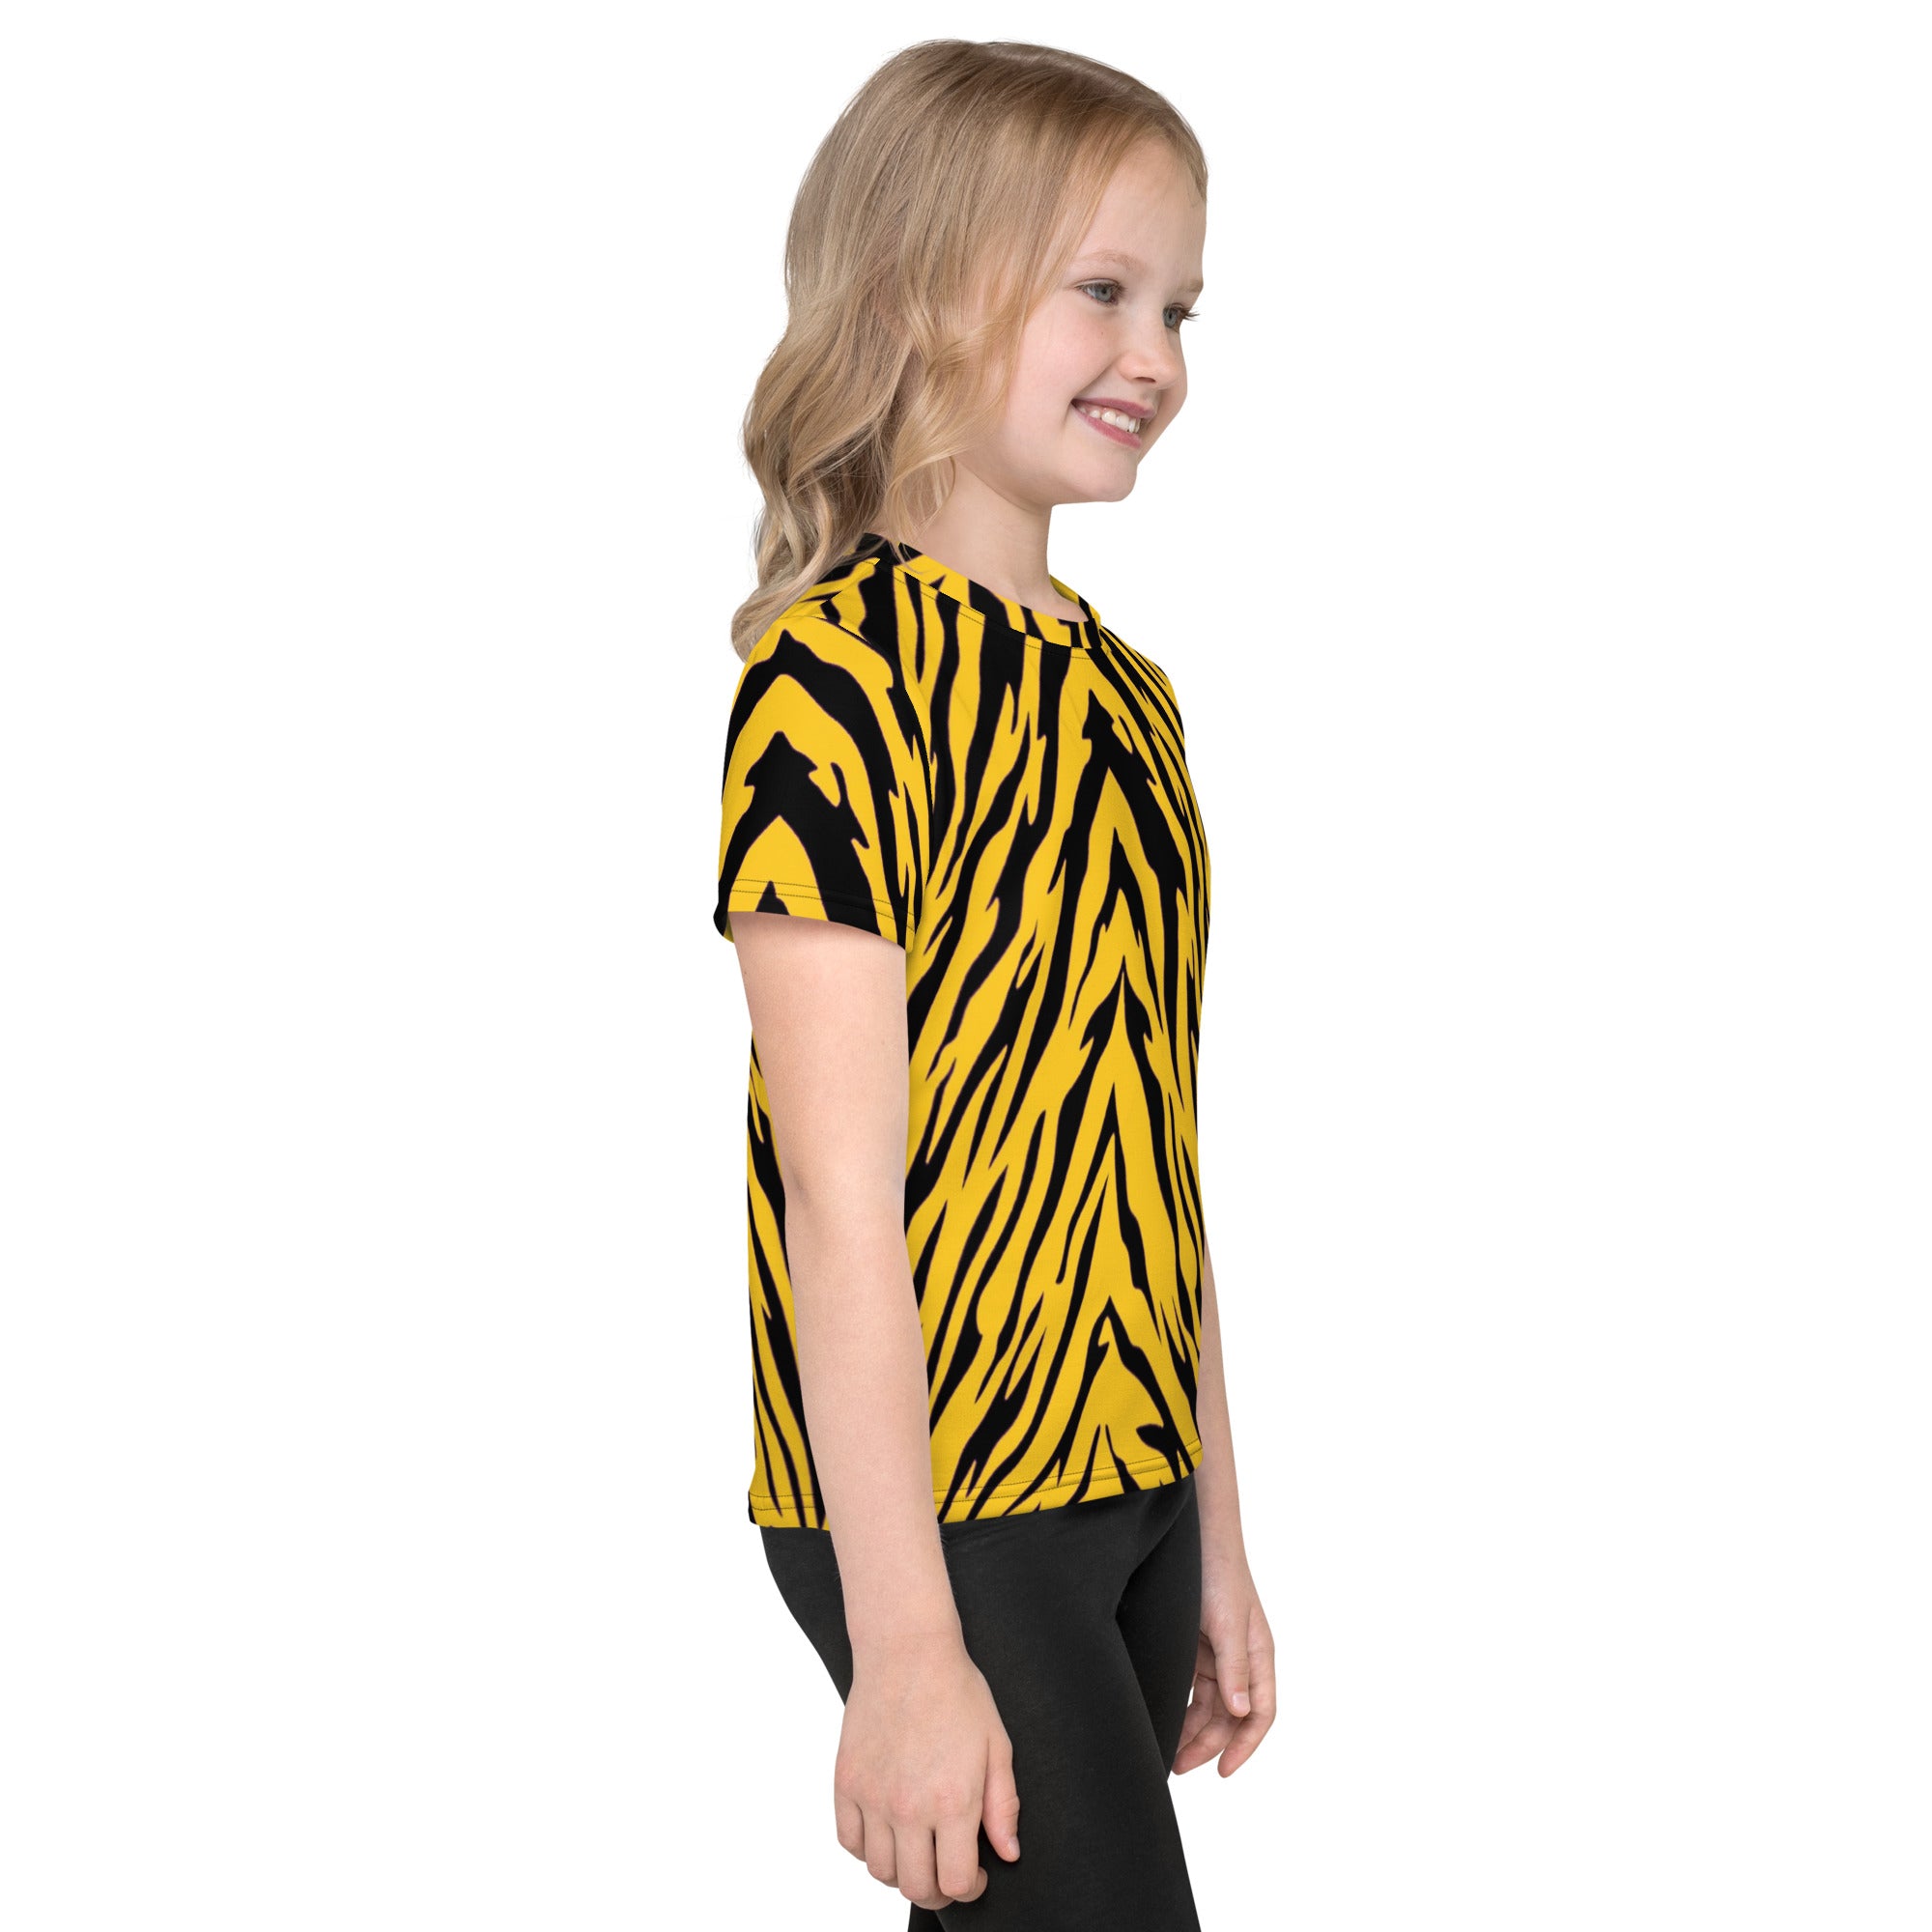 Black and Gold Tiger Stripe Kids Crew Neck T-shirt